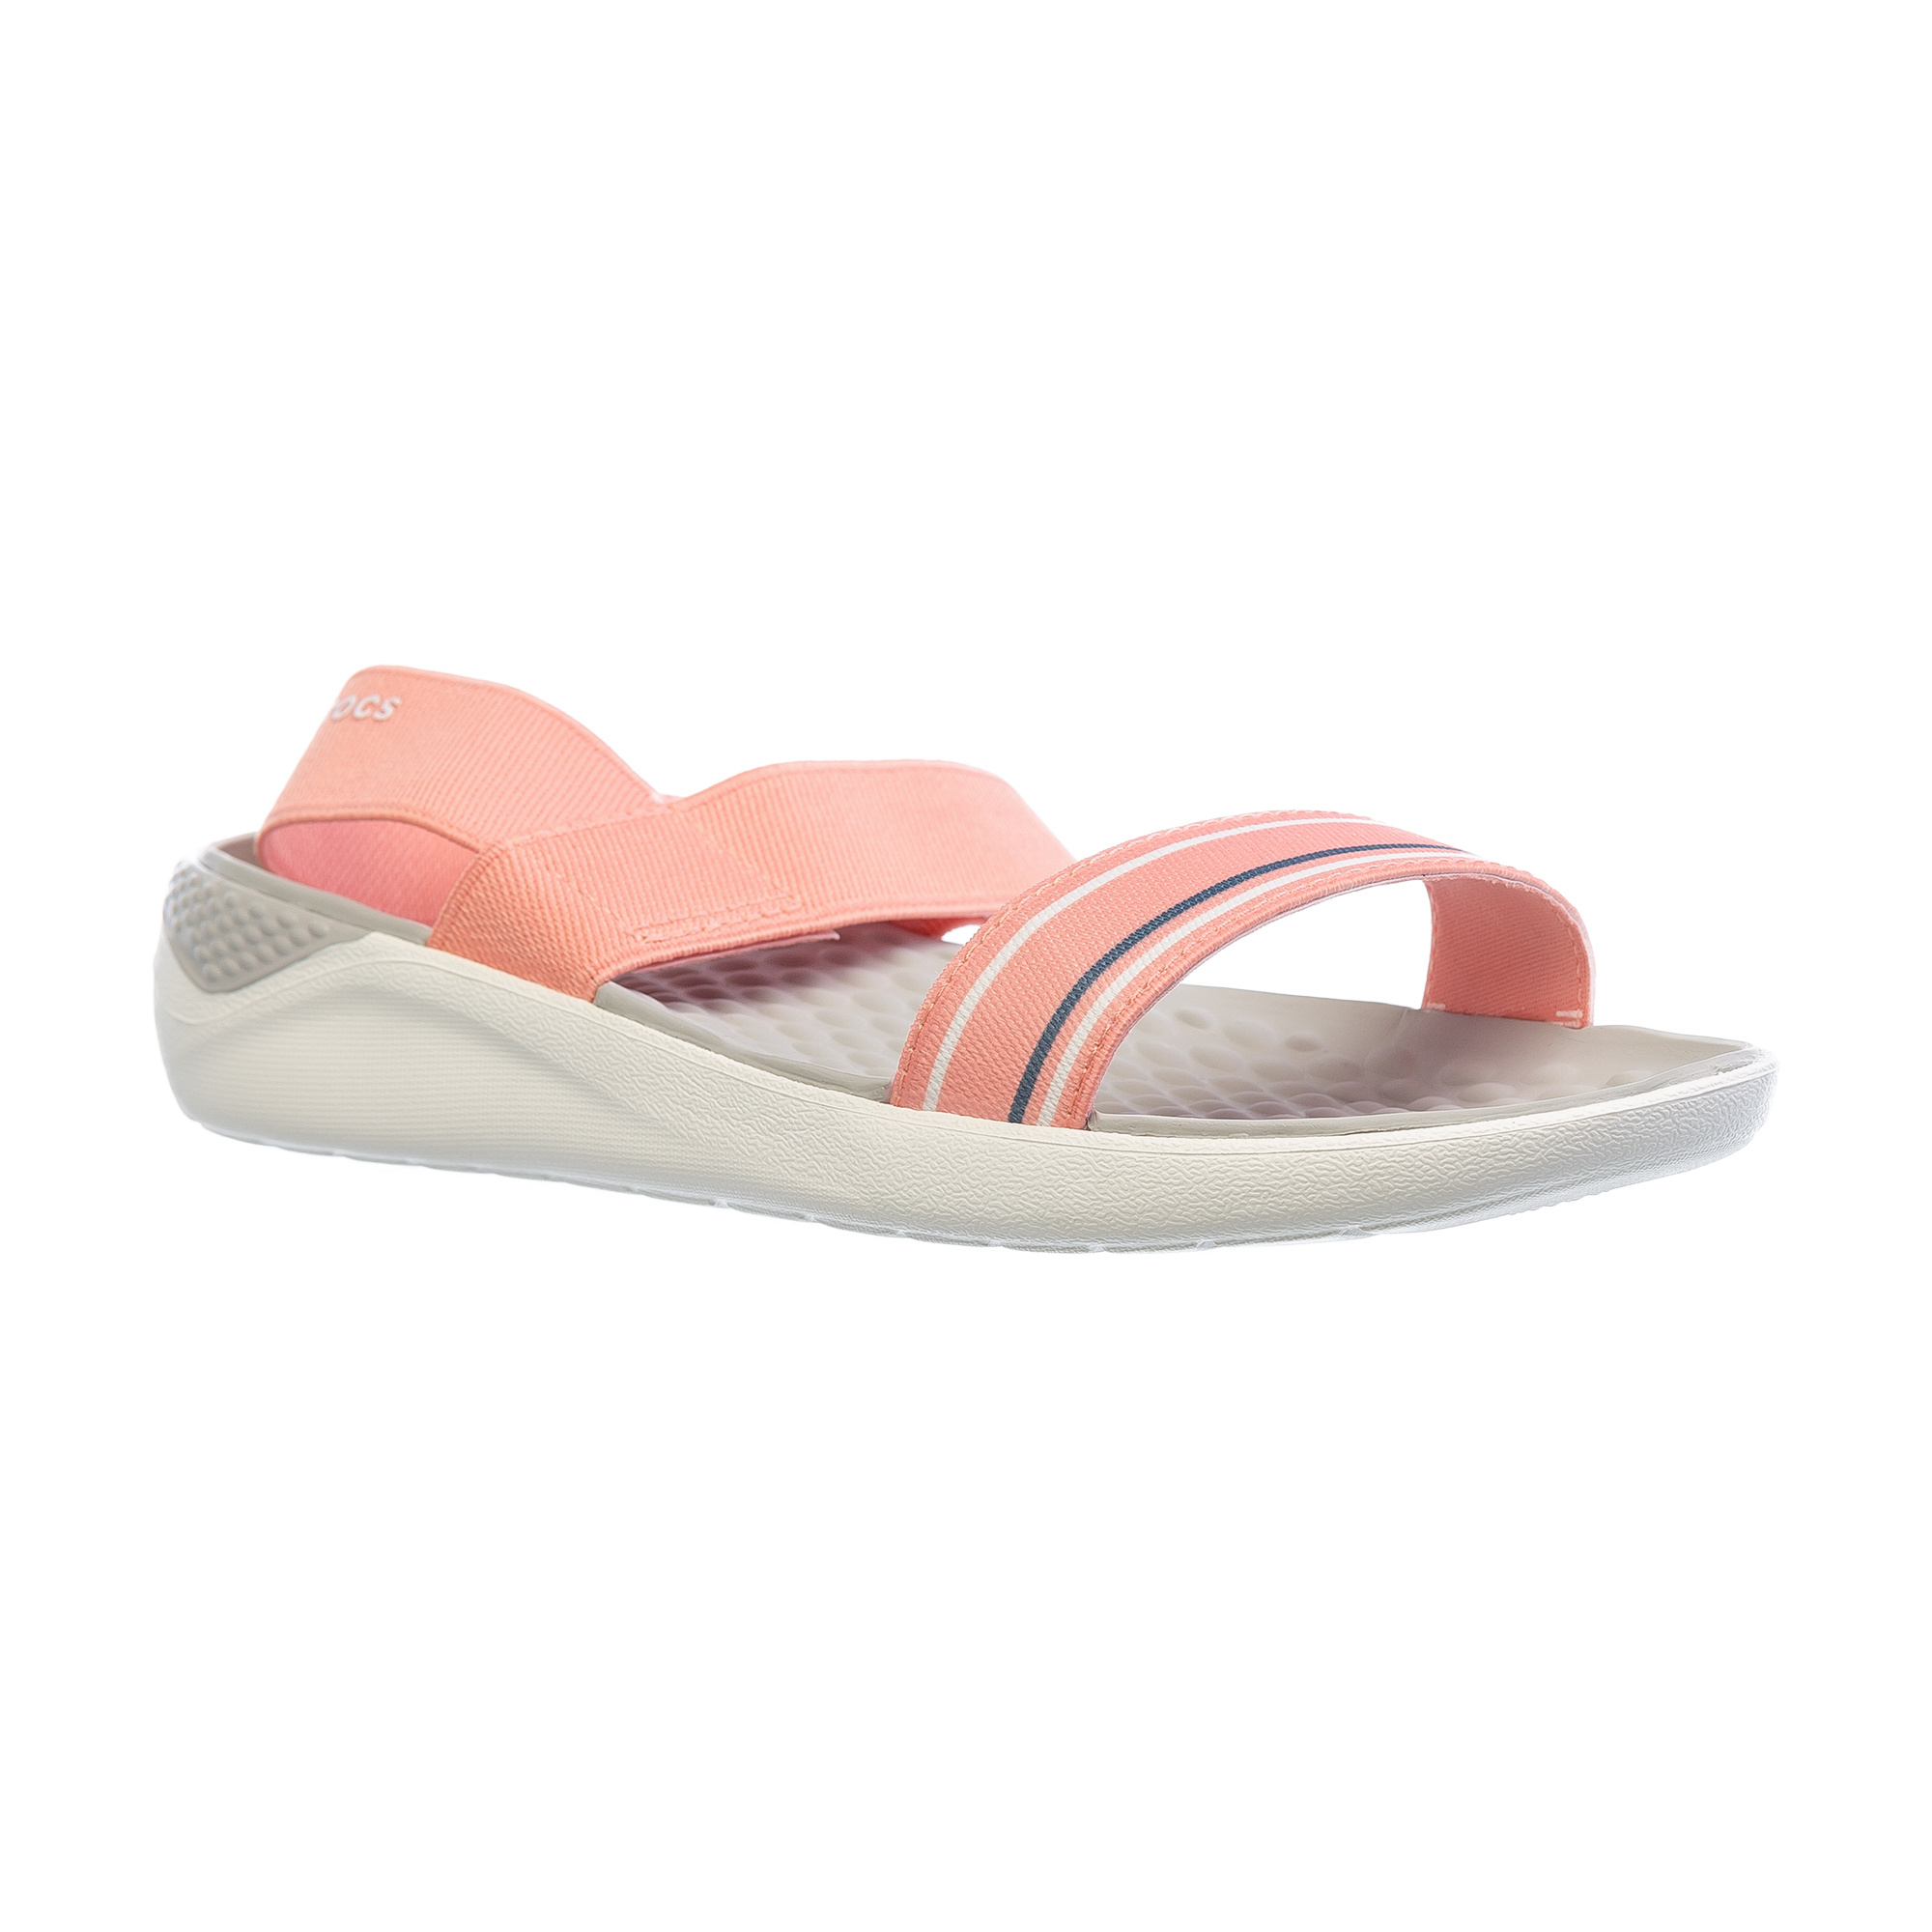 LiteRide Sandal W Crocs, размер 36, цвет розовый CR205106 - фото 1